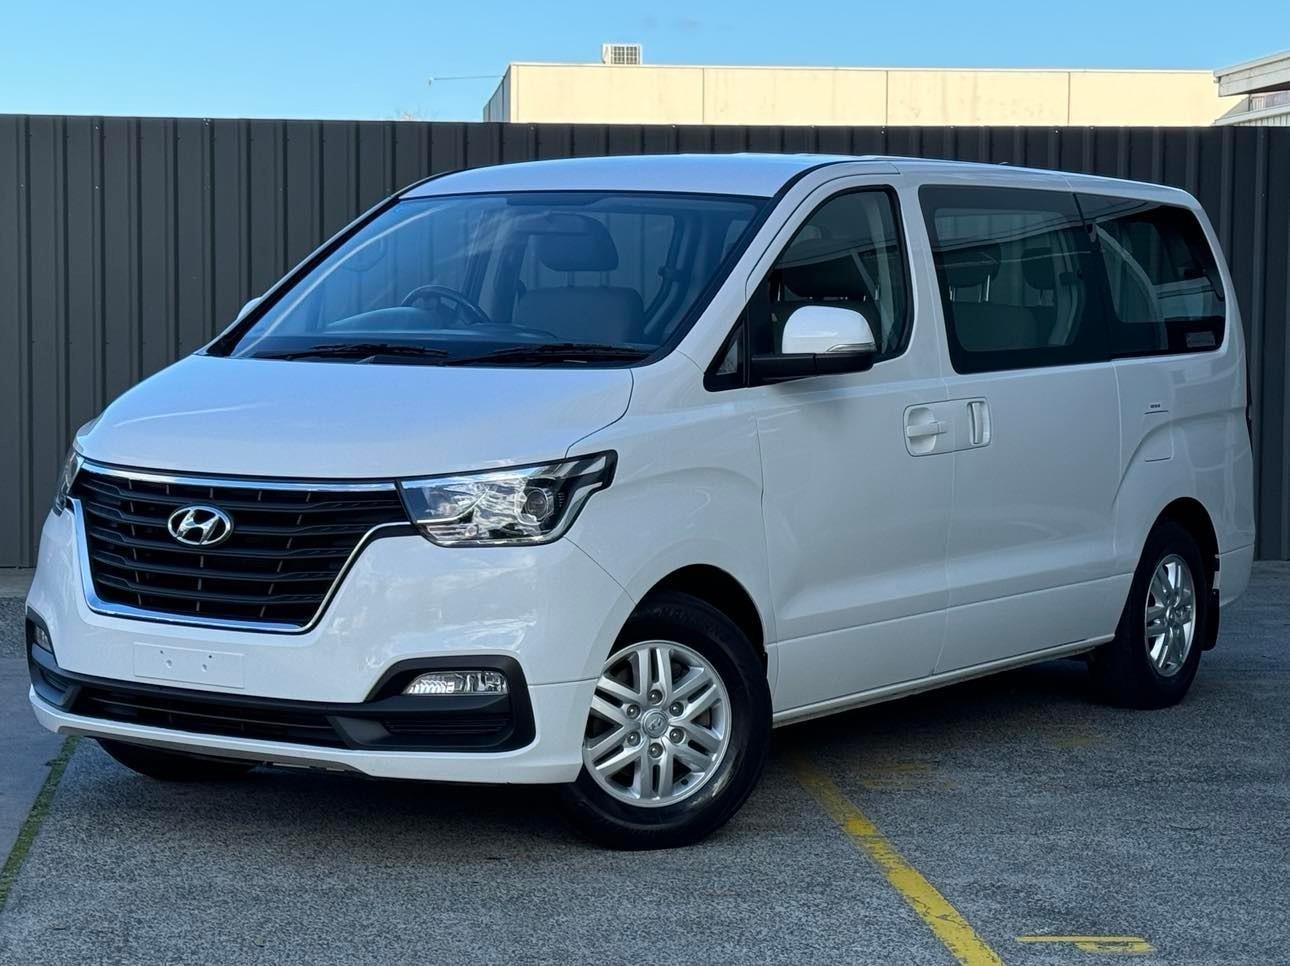 Hyundai Imax image 3